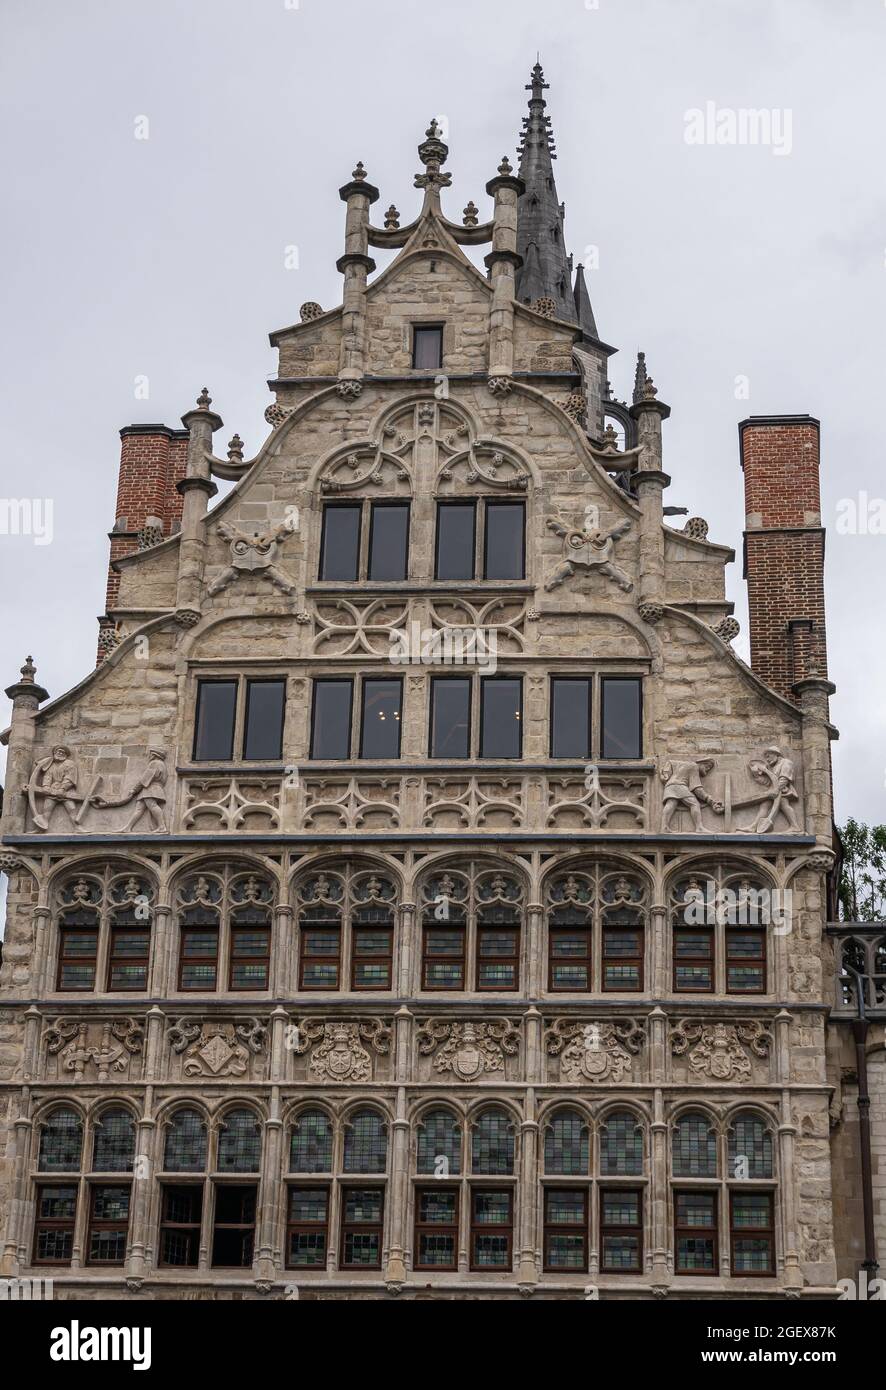 Gent, Flanders, Belgium - July 30, 2021: Facade top of Huis van de Vrije Schippers (House of the free shippers) on Graslei along Leie river. Sculpted Stock Photo